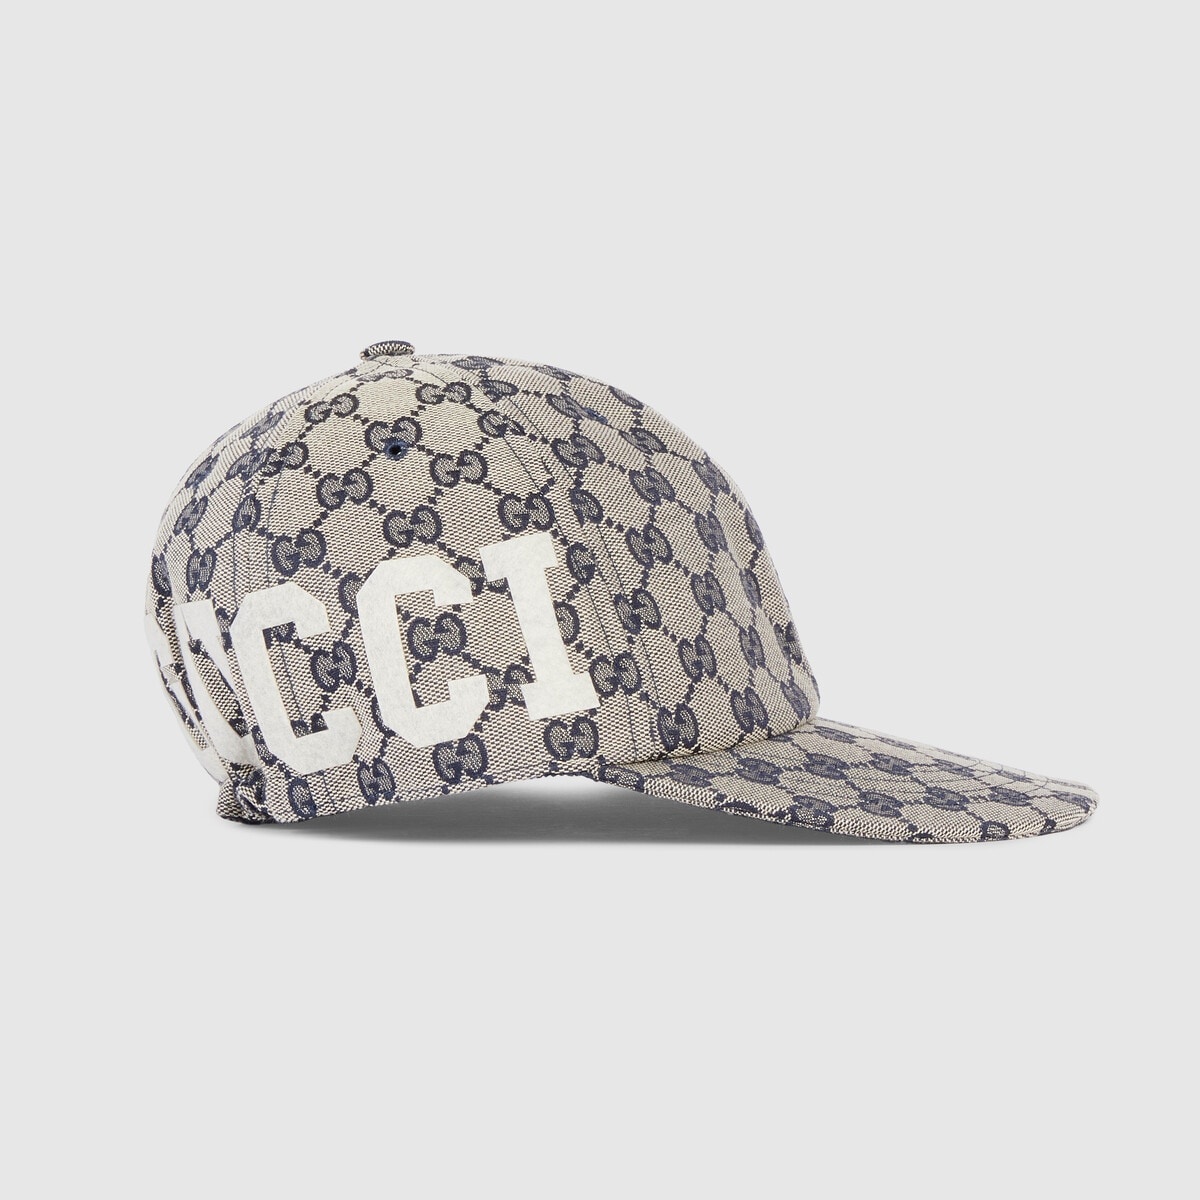 GG cotton canvas baseball hat - 3